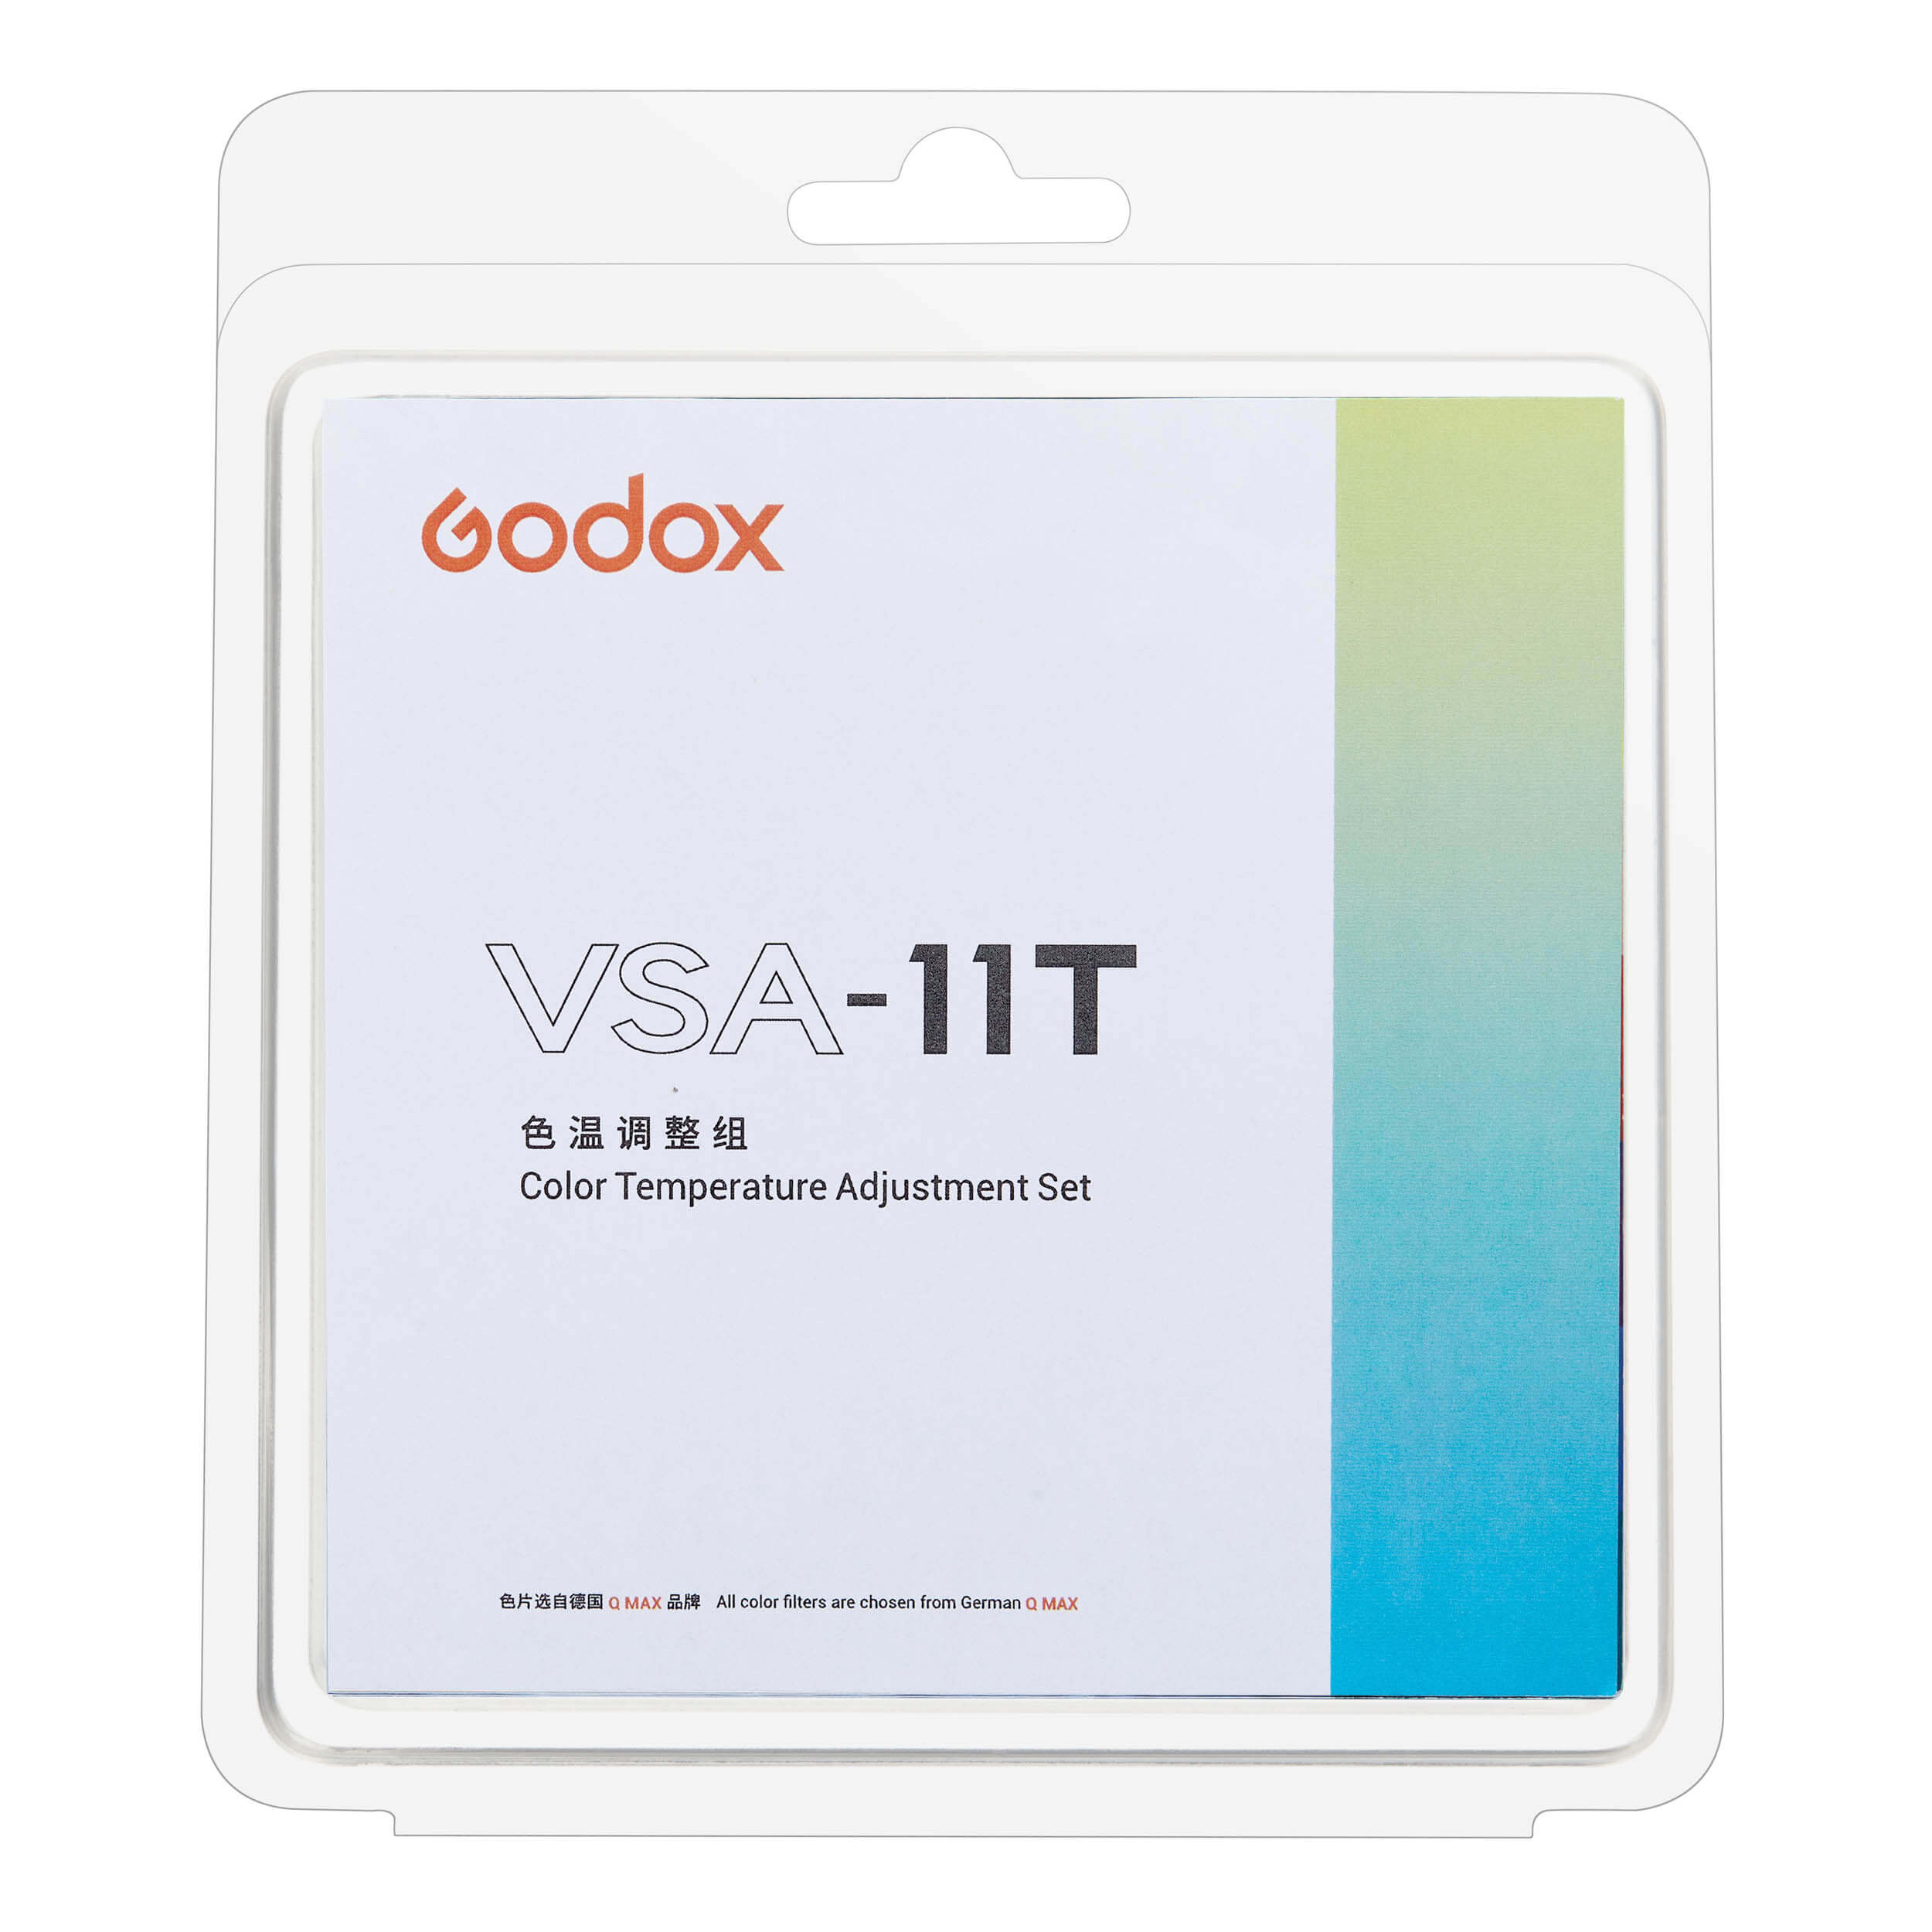 VSA-11T Colour Temperature Correction Set for GODOX VSA Spotlight System